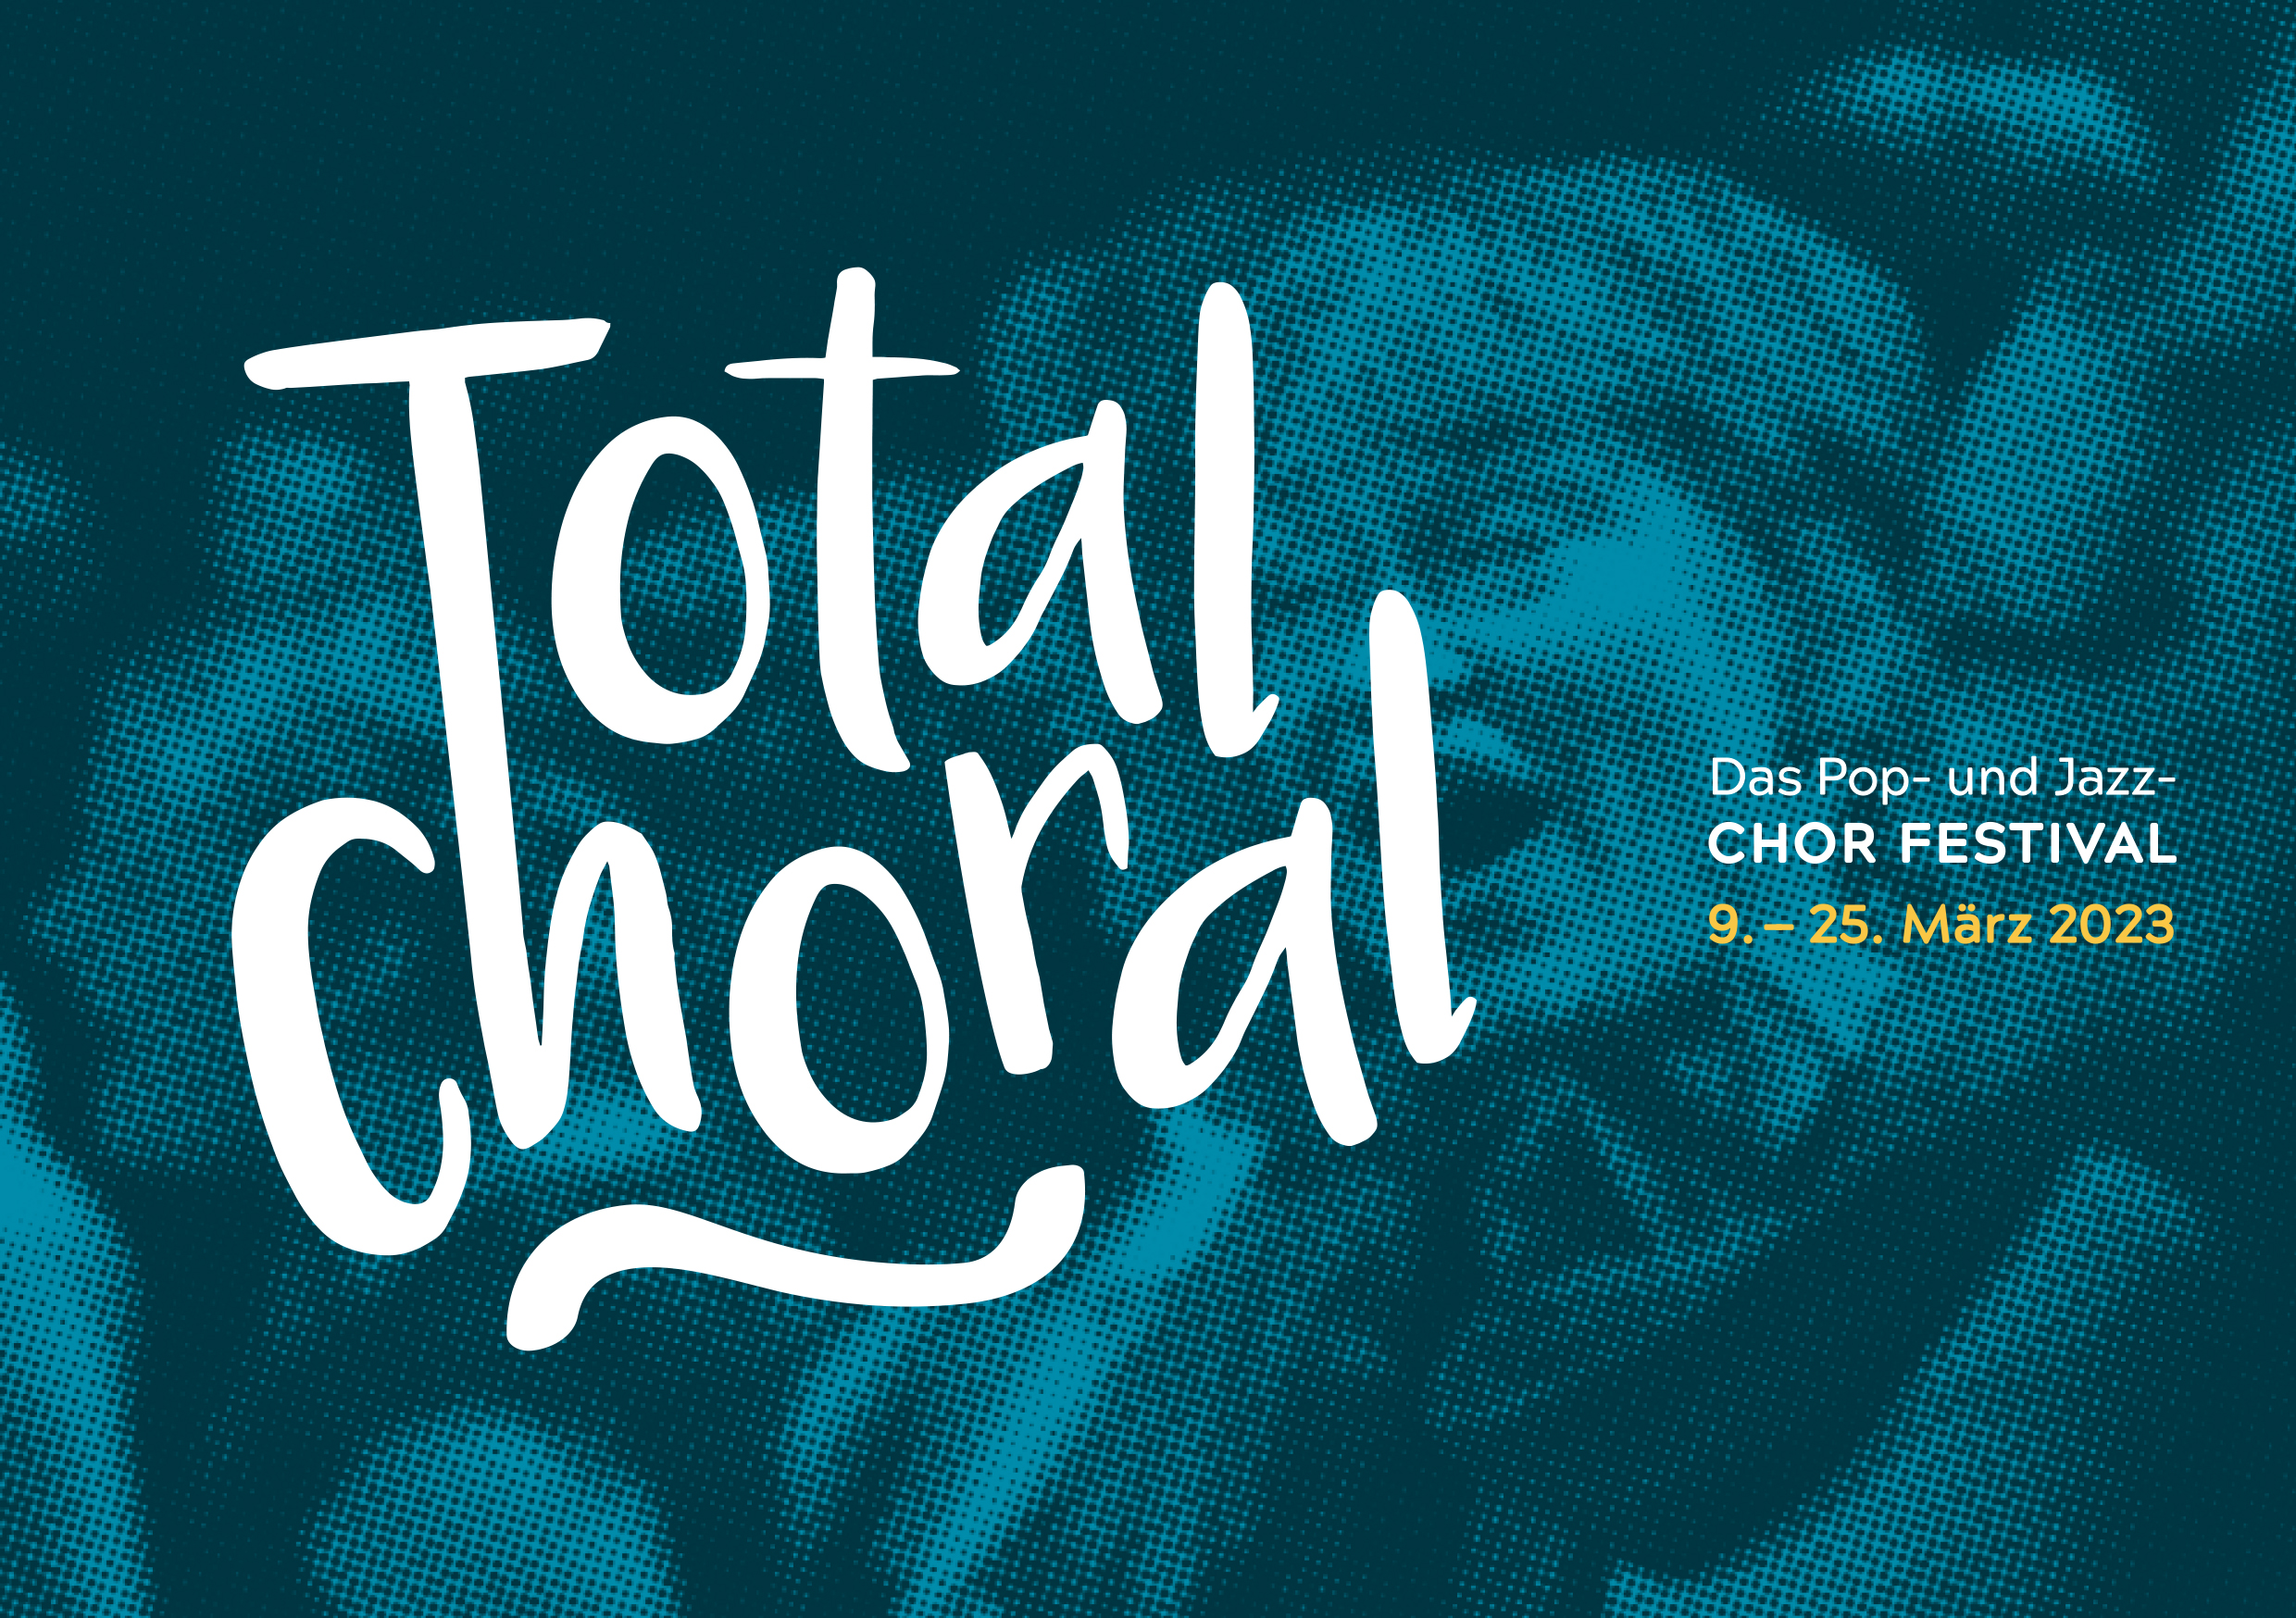 Total Choral Programm 2023